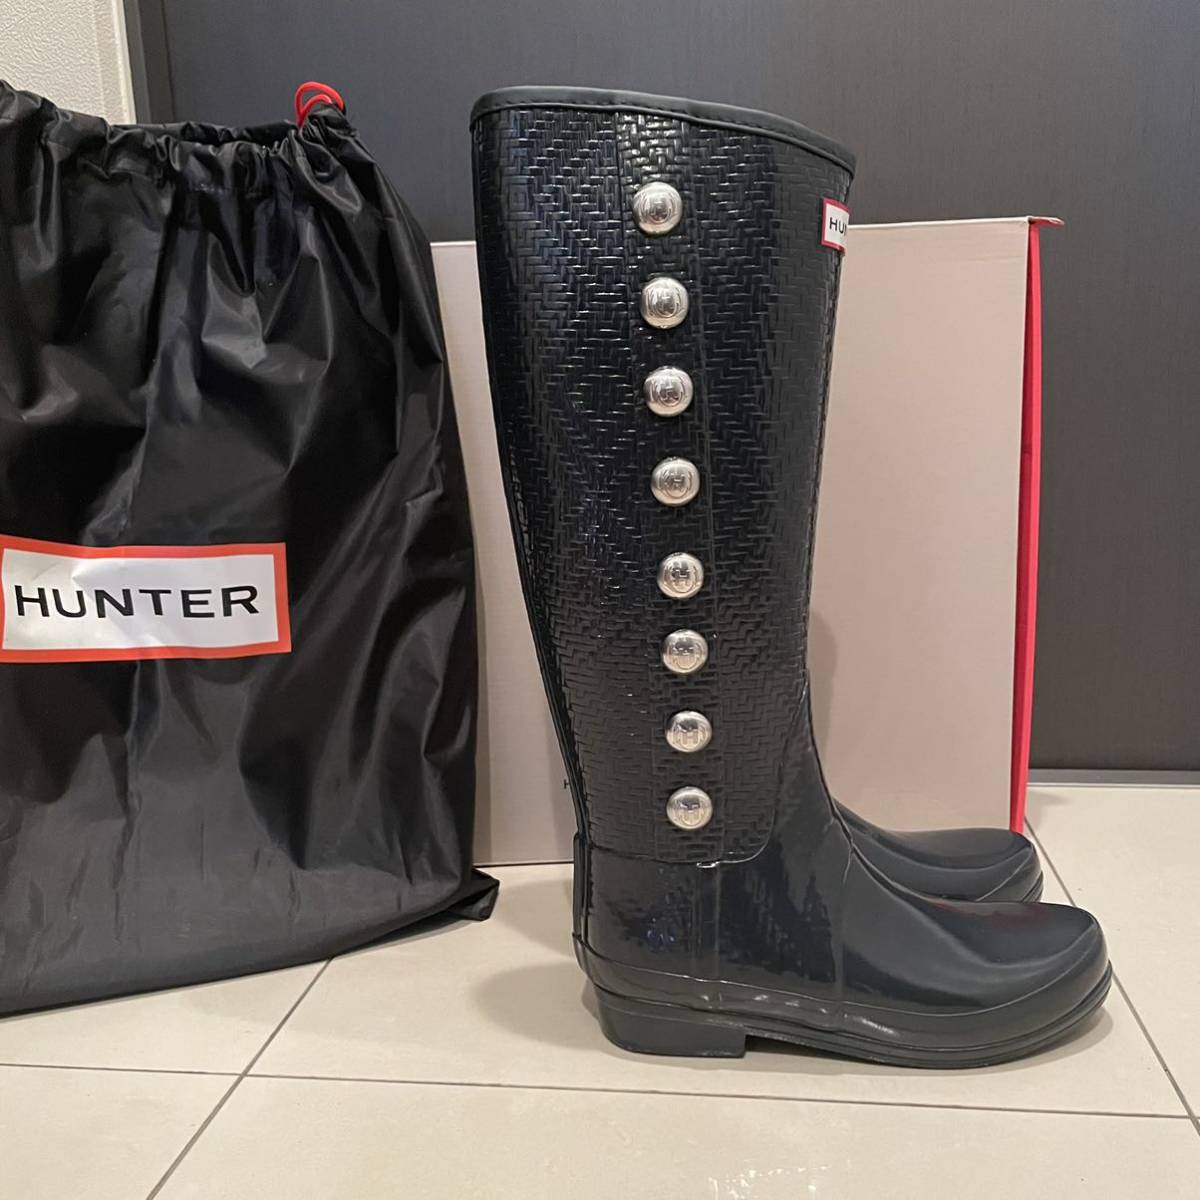  free shipping HUNTER Hunter Lee jento Glo beech -HUNTER REGENT GROSVENOR rain boots boots side button navy 